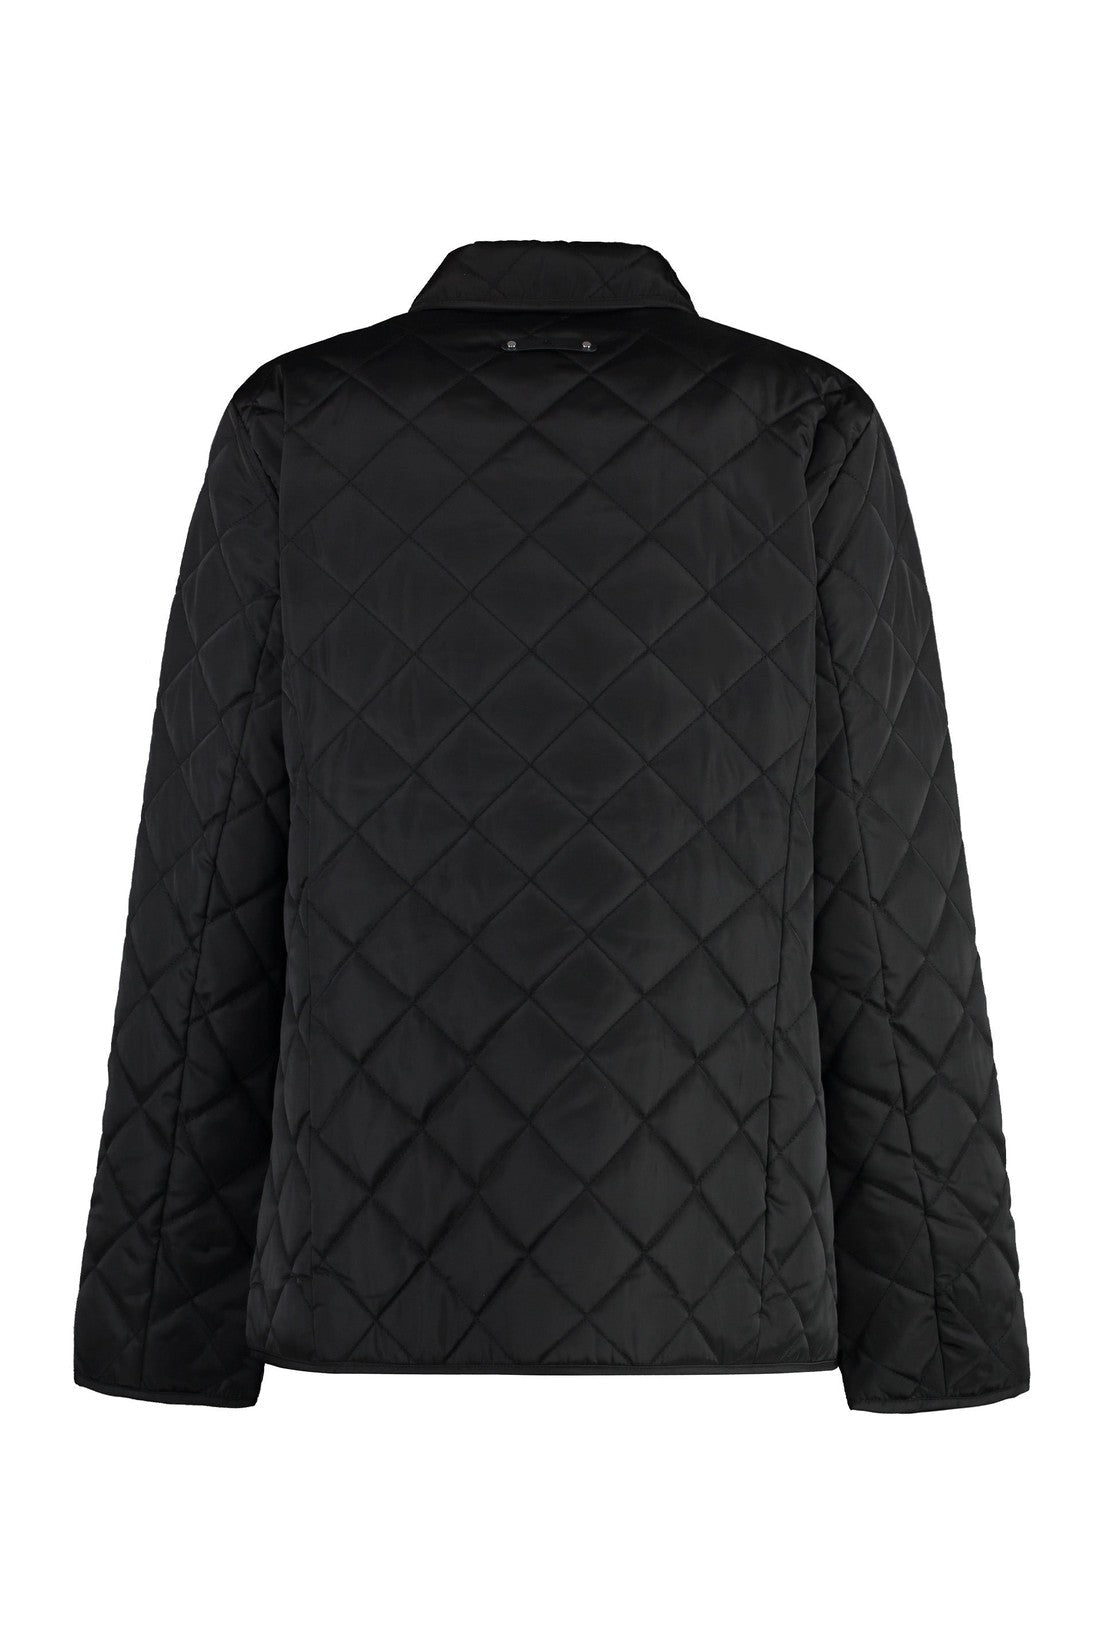 Polo Ralph Lauren-OUTLET-SALE-Quilted jacket-ARCHIVIST